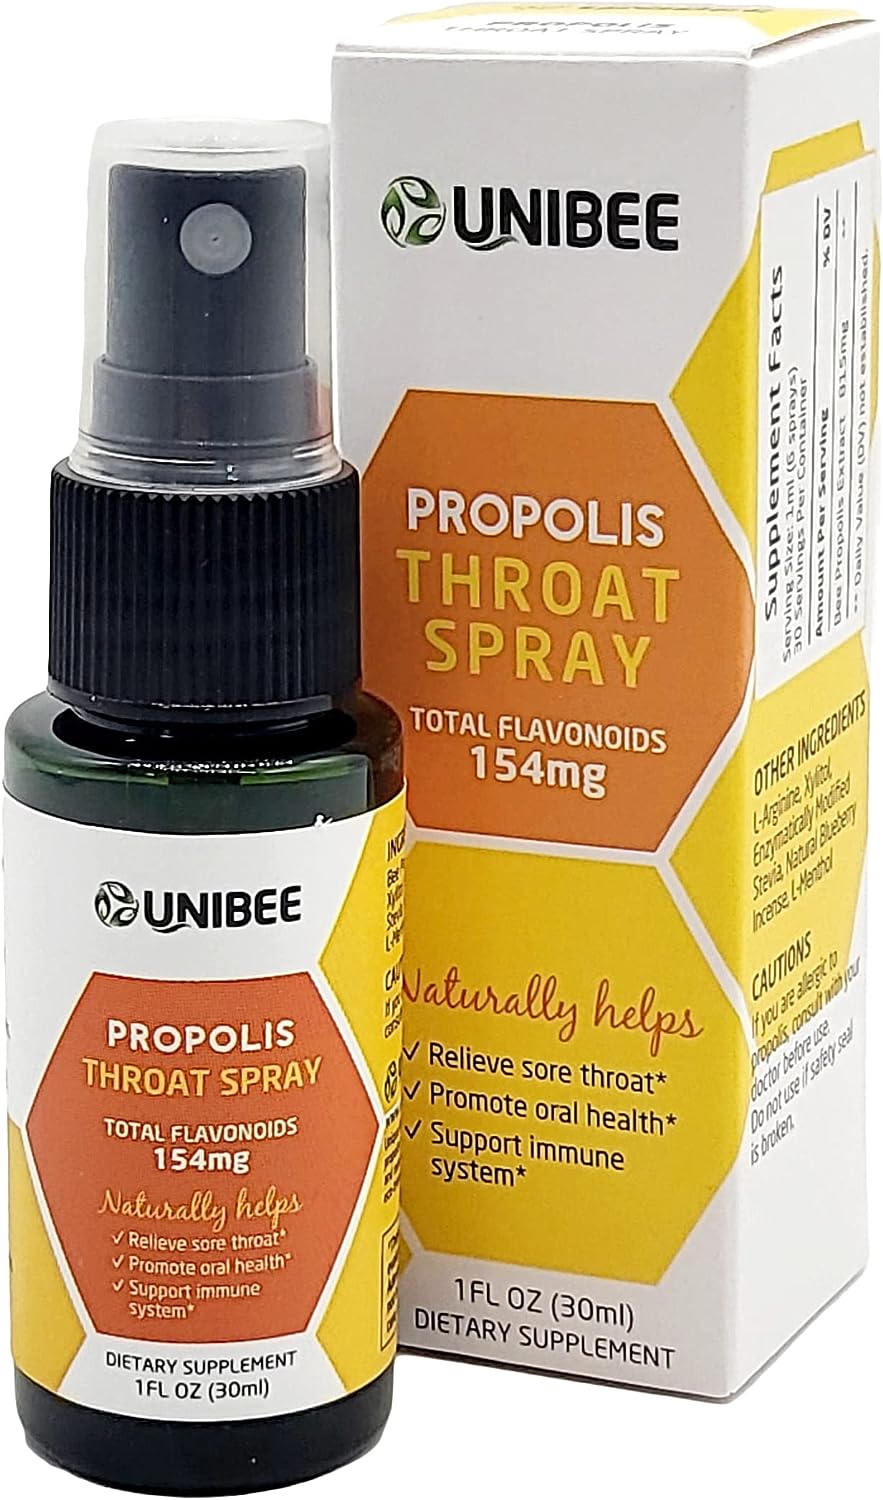 UNIBEE Propolis Throat Spray (Total Flavonoids 154mg) [...]